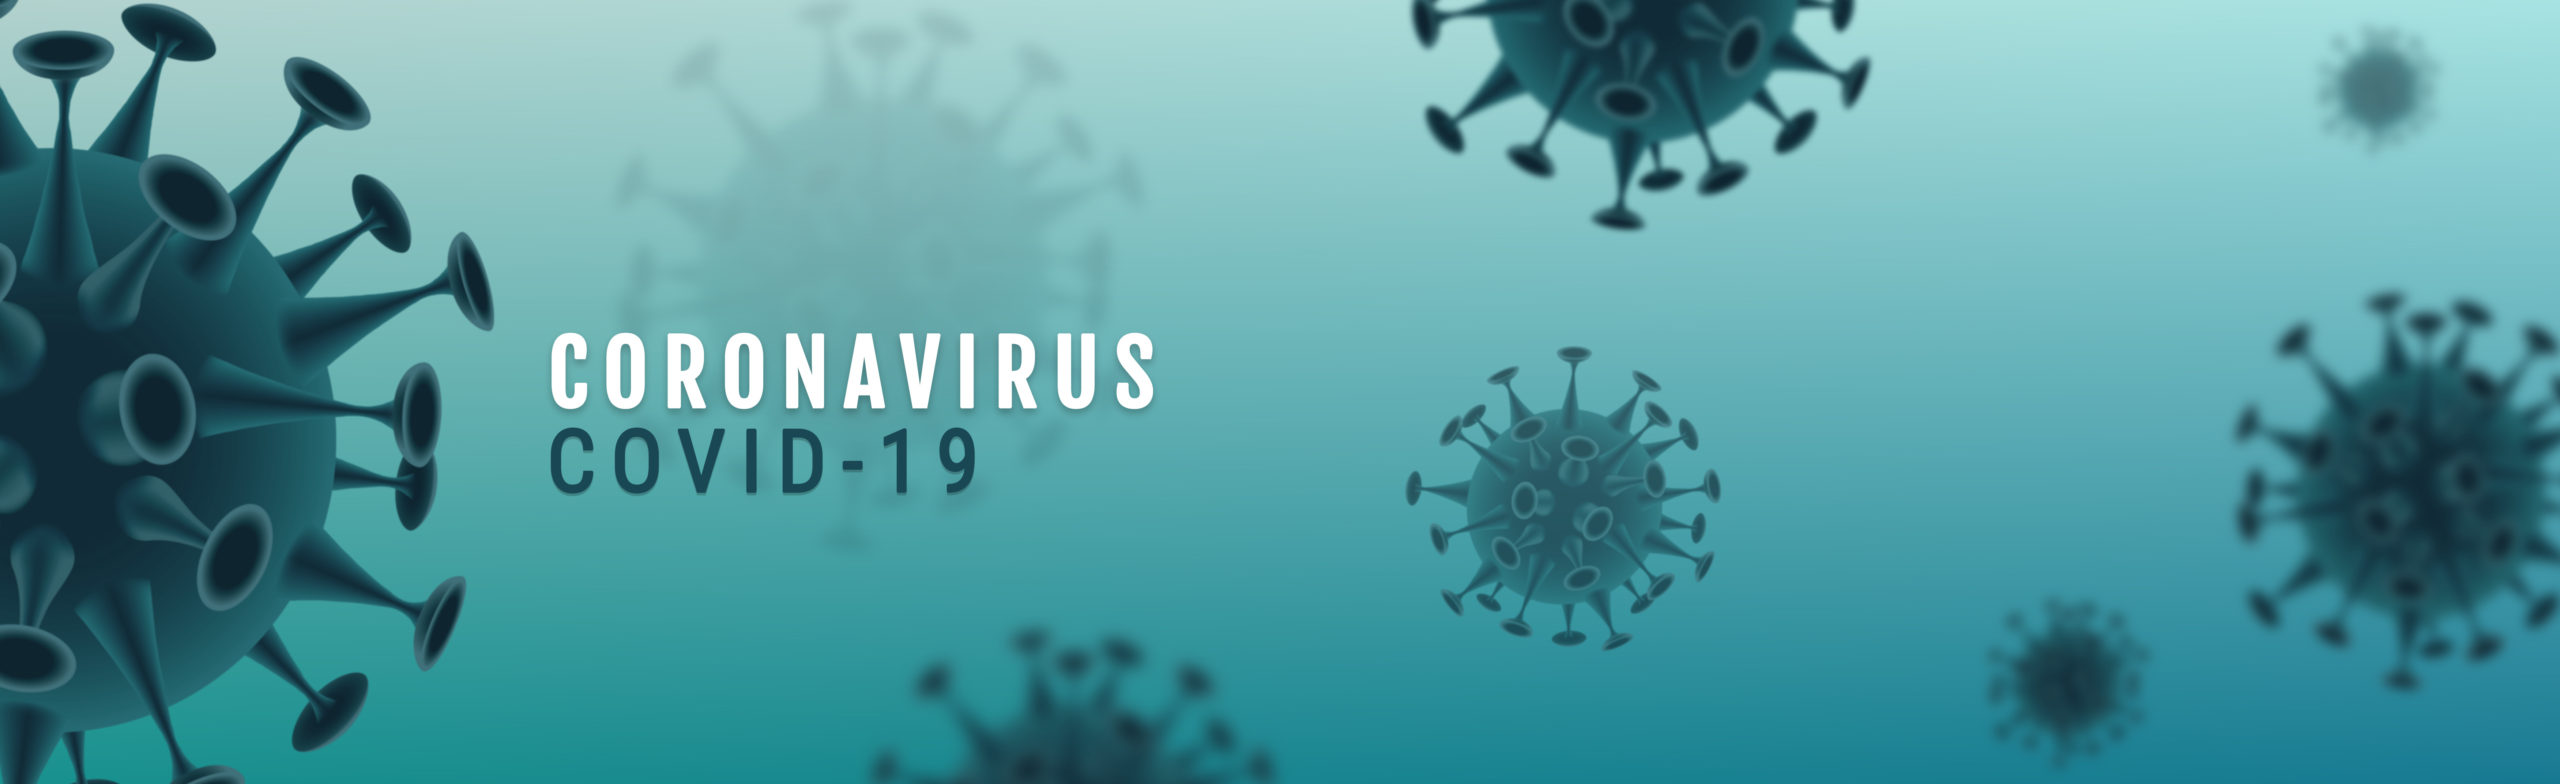 Coronavirus CV19 Testing and Sampling scaled